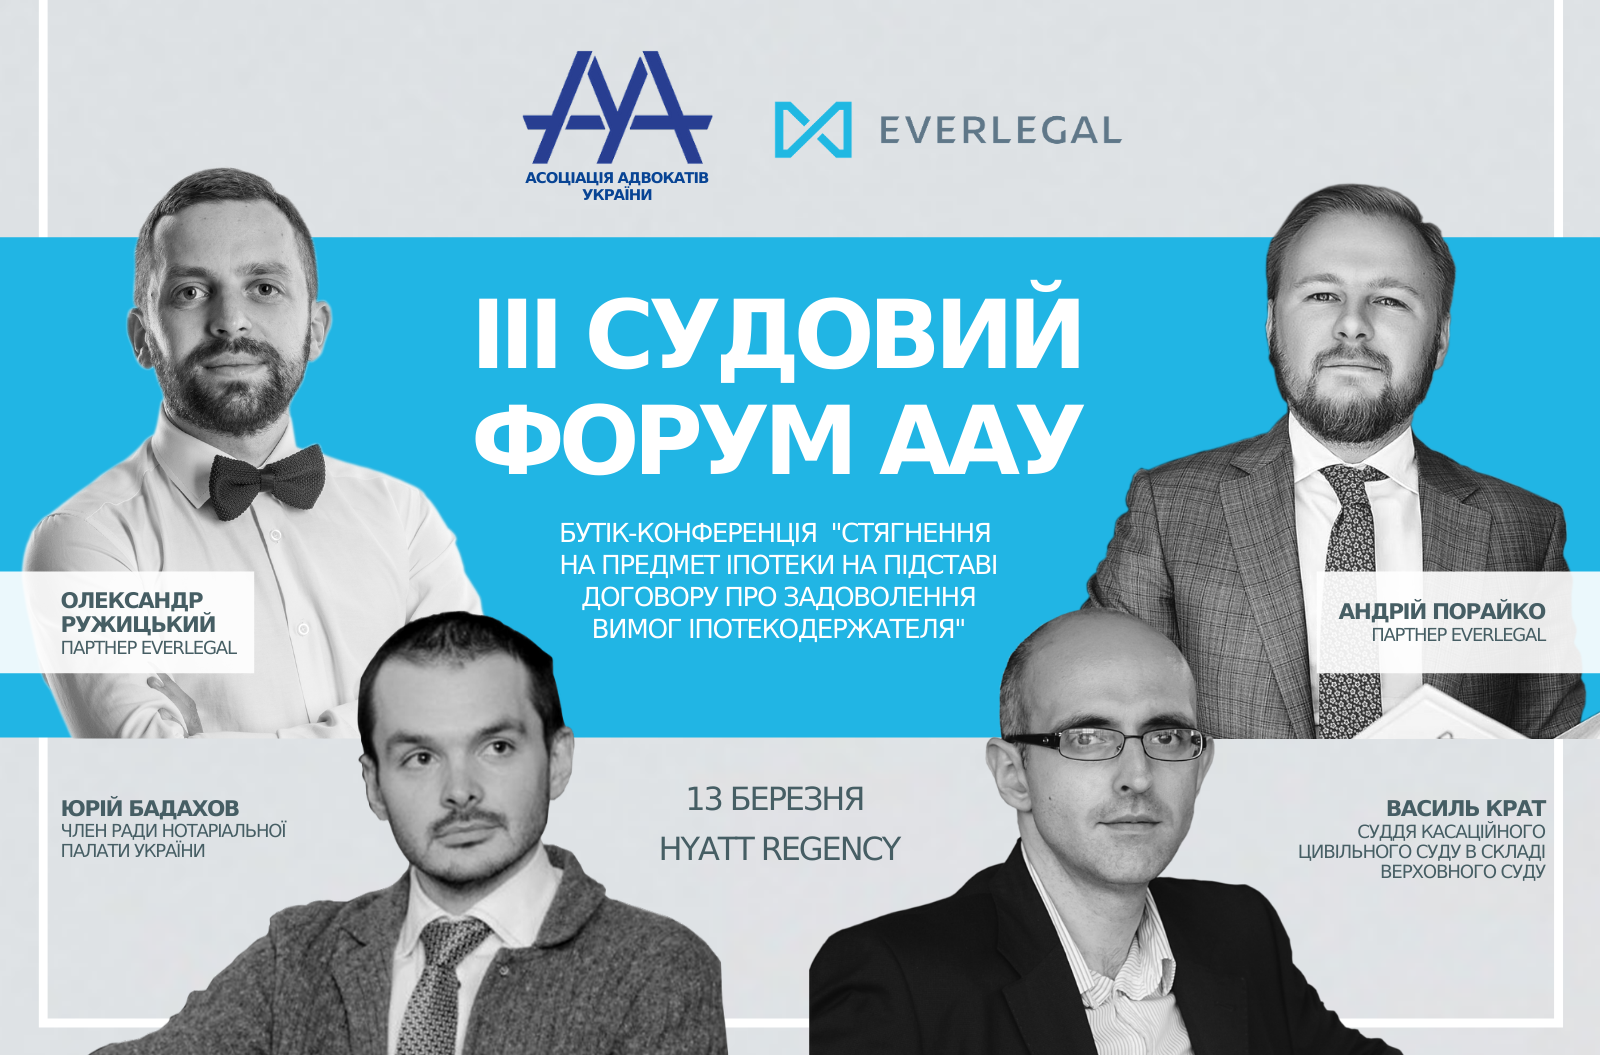 EVERLEGAL is inviting for III Litigation Forum UAA